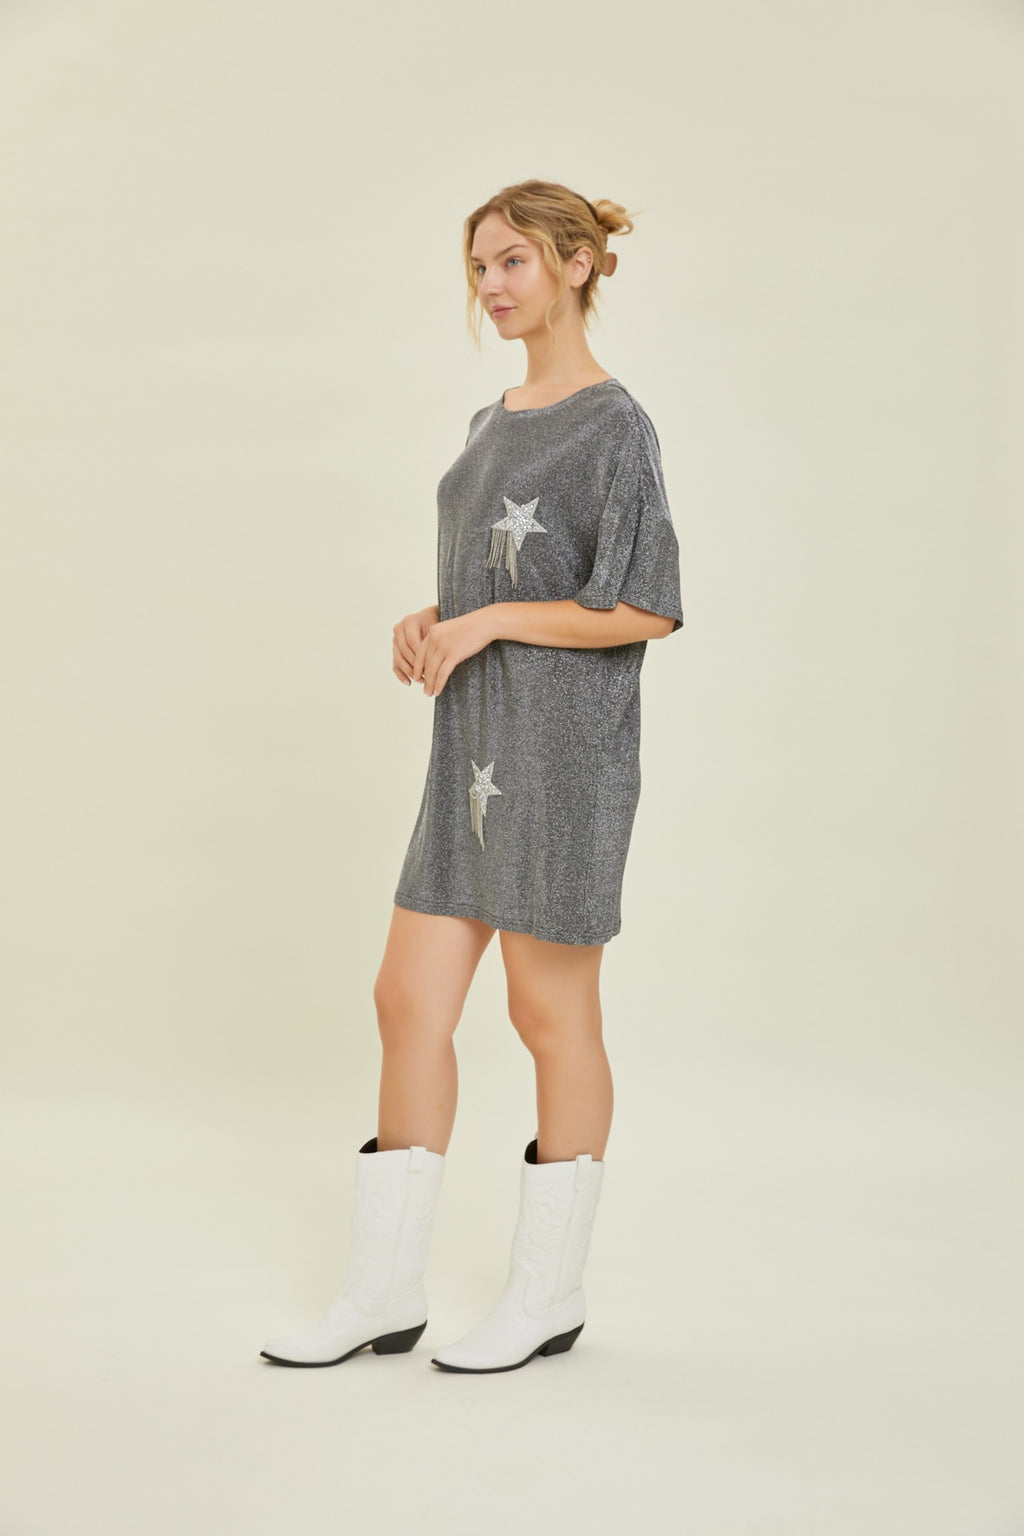 Rhinestone Star Detail Lurex T-Shirt Dress